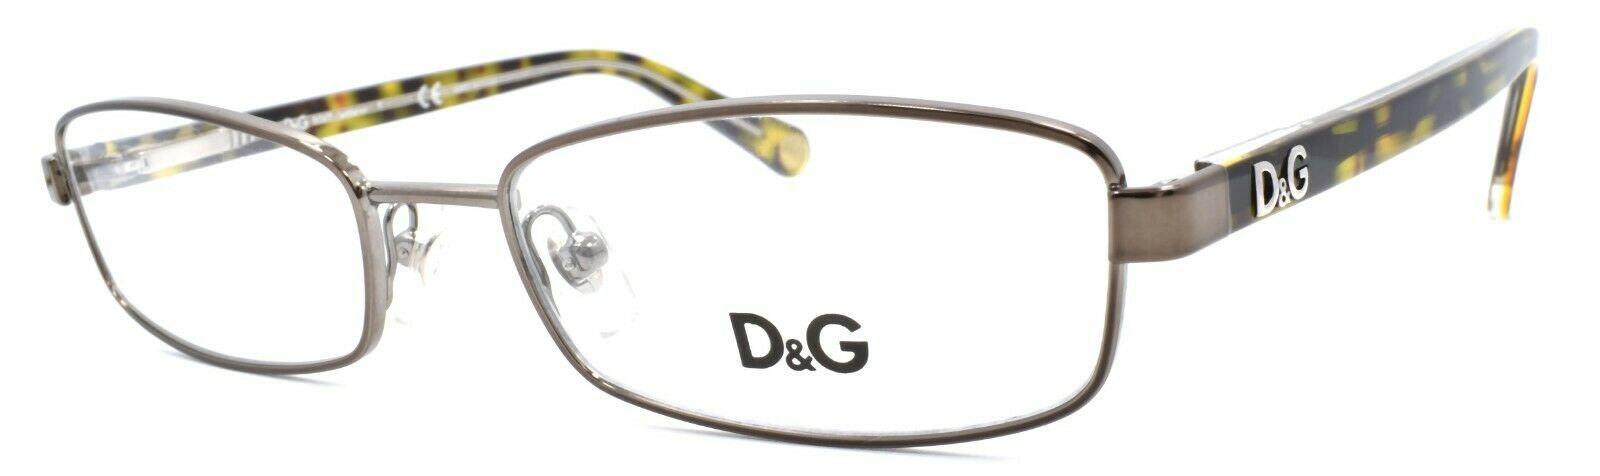 1-Dolce & Gabbana D&G 5090 1006 Women's Eyeglasses 50-17-135 Gunmetal / Tortoise-679420393377-IKSpecs